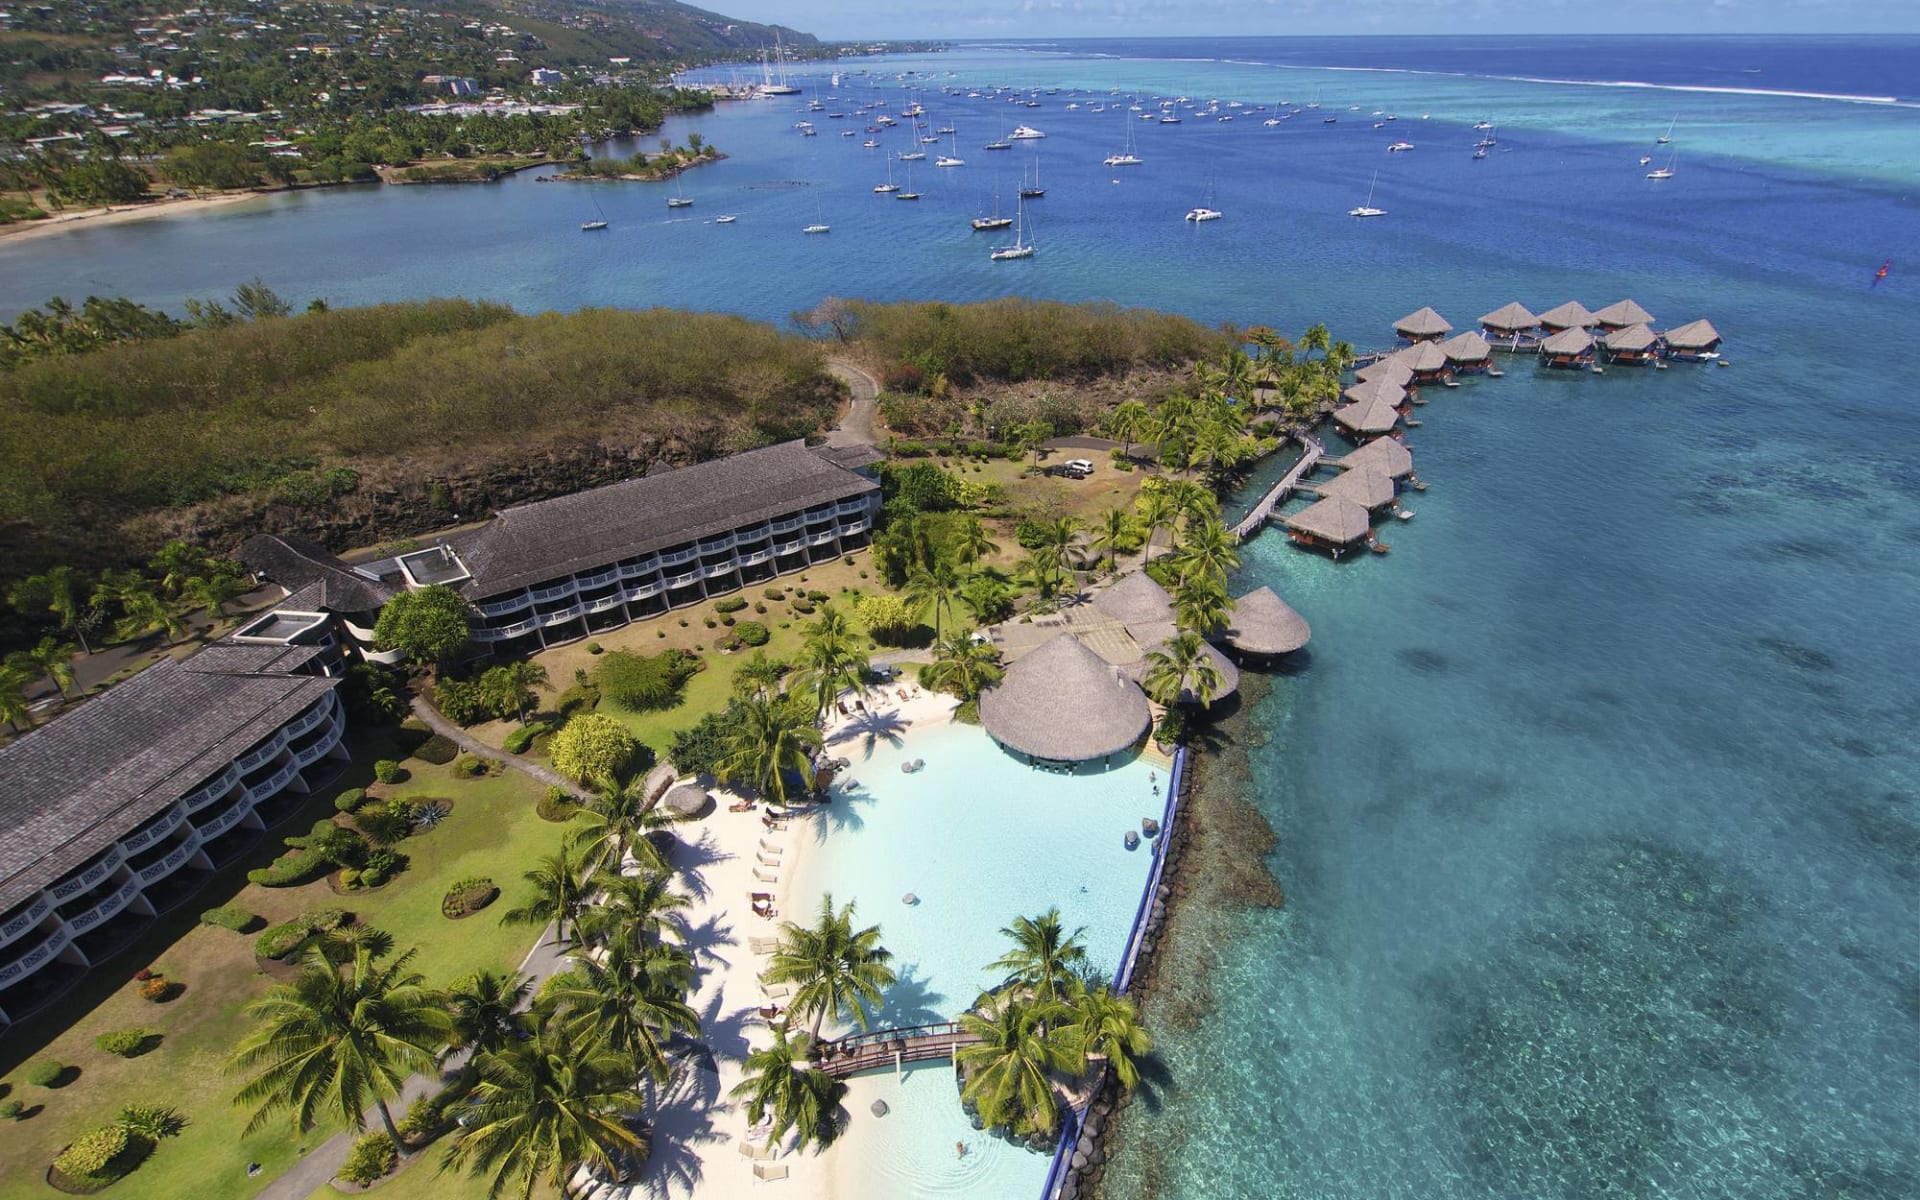 InterContinental Tahiti Resort in Papeete - Faa'a:  Intercontinental Tahiti Resort - Aerial View über das Resort 2017